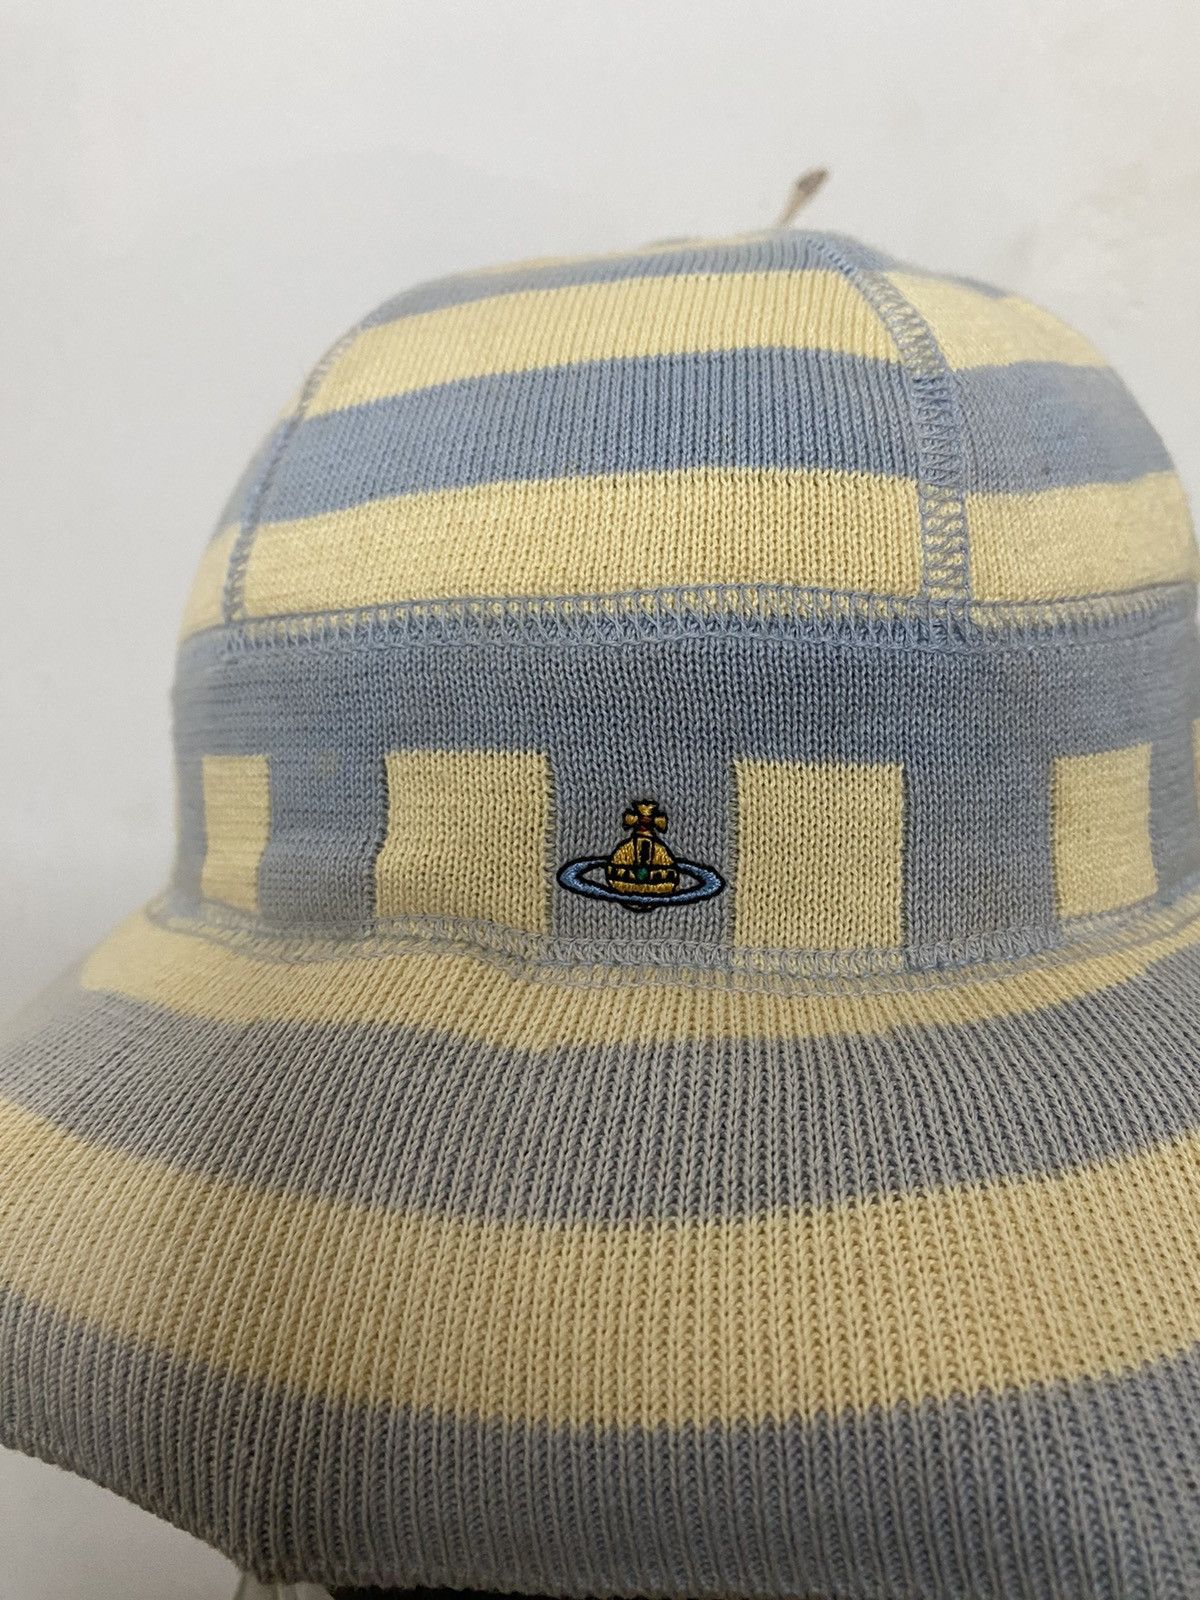 🔥Offer🔥Vivienne Westwood Chapeaux Knit Bucket Hat - 2